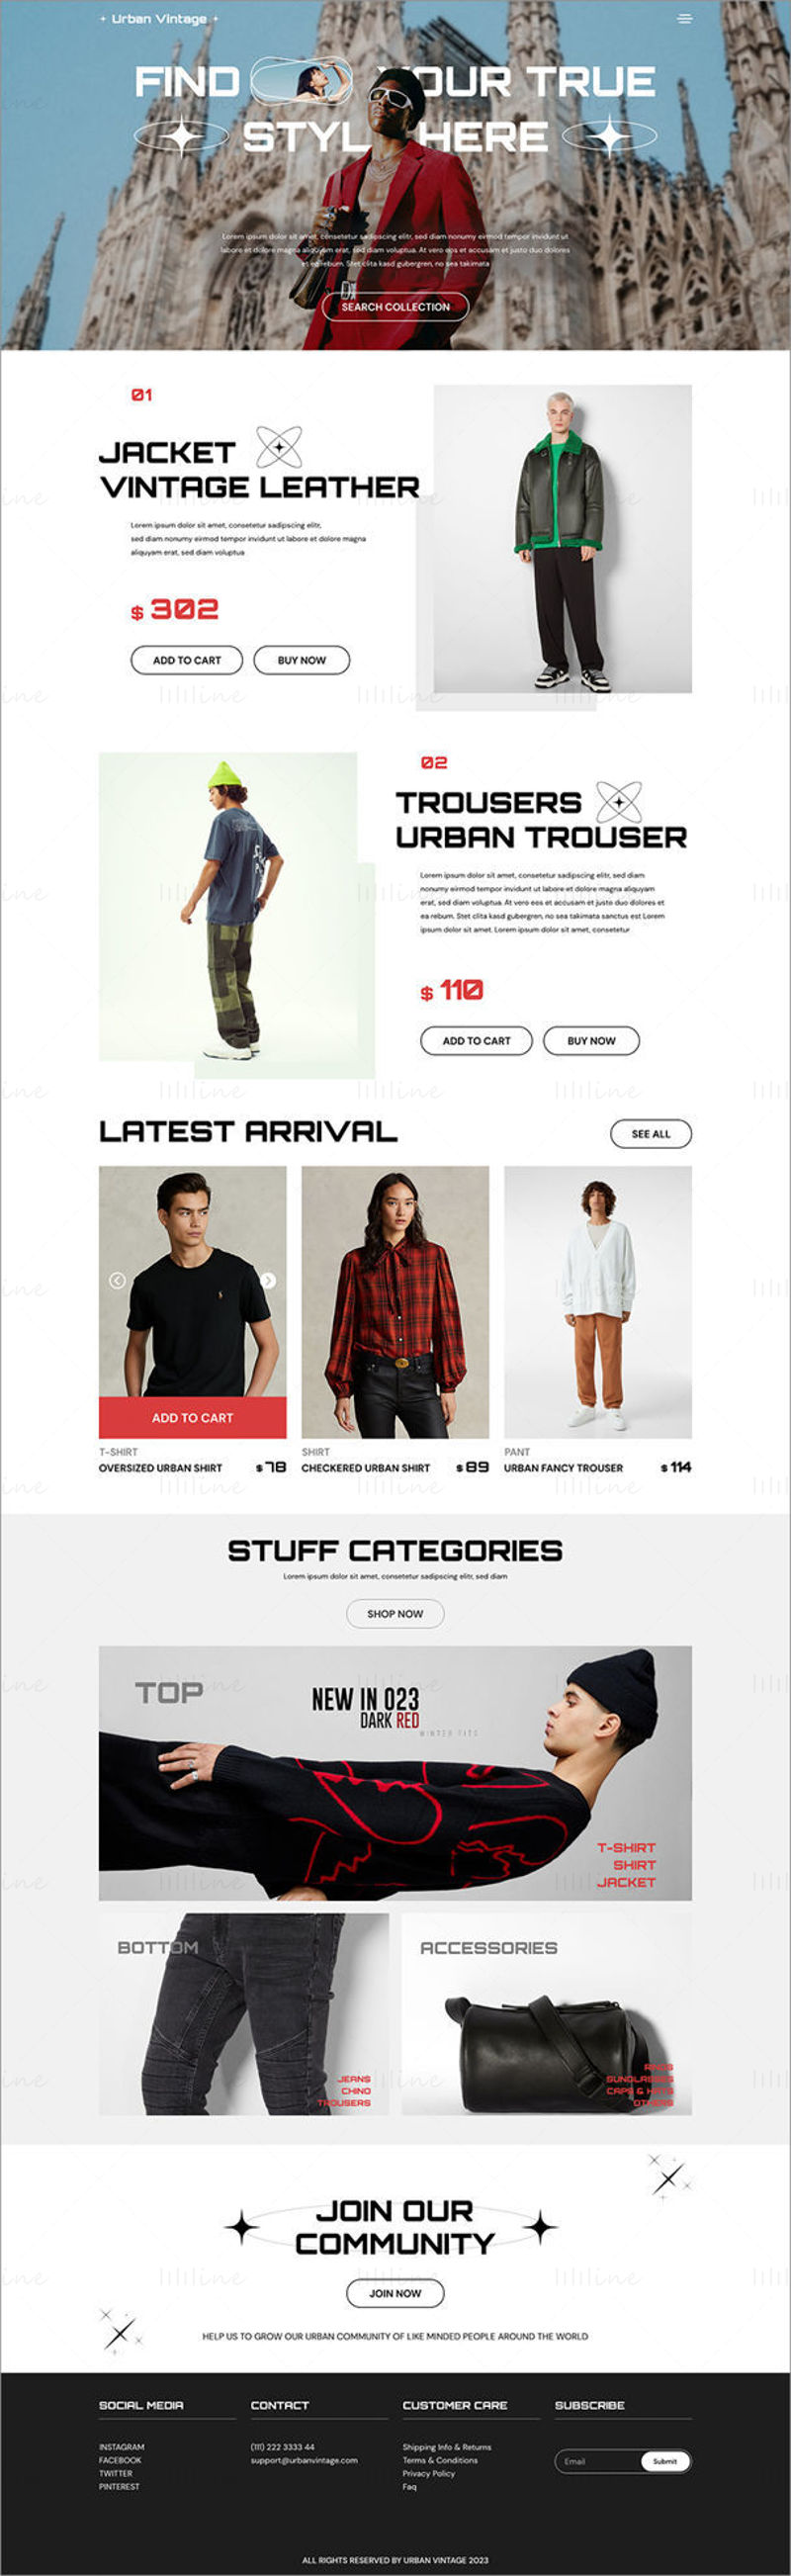 Urban Vintage Cloths selling website UI Template - UI Adobe XD